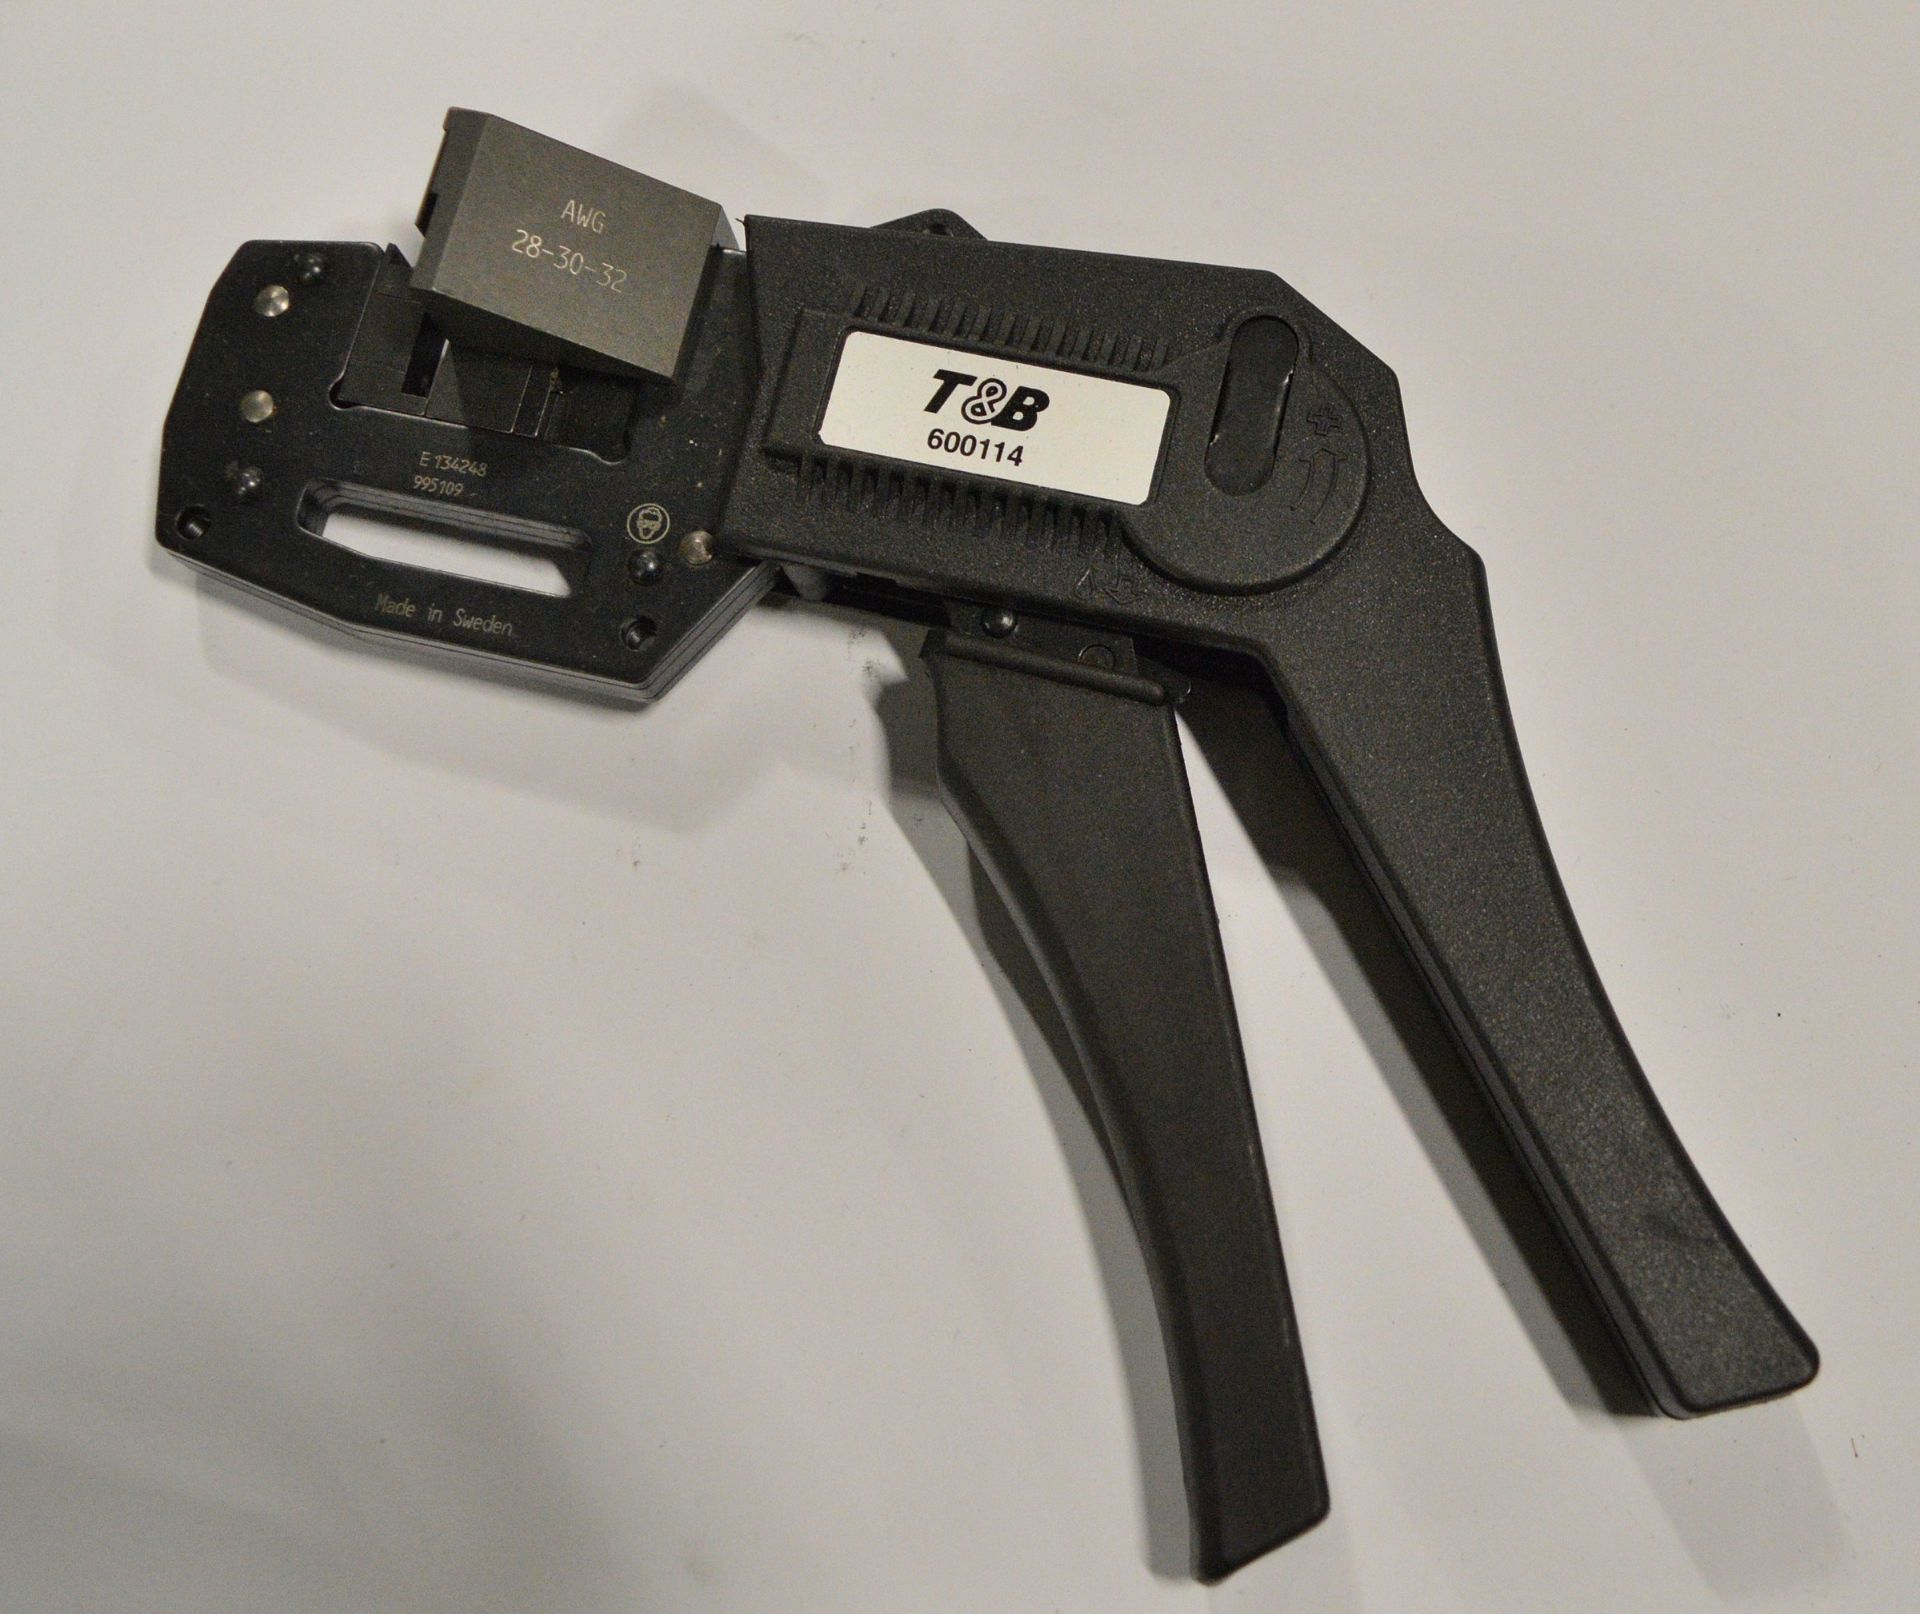 T&B 600114 hand tool - Image 2 of 2